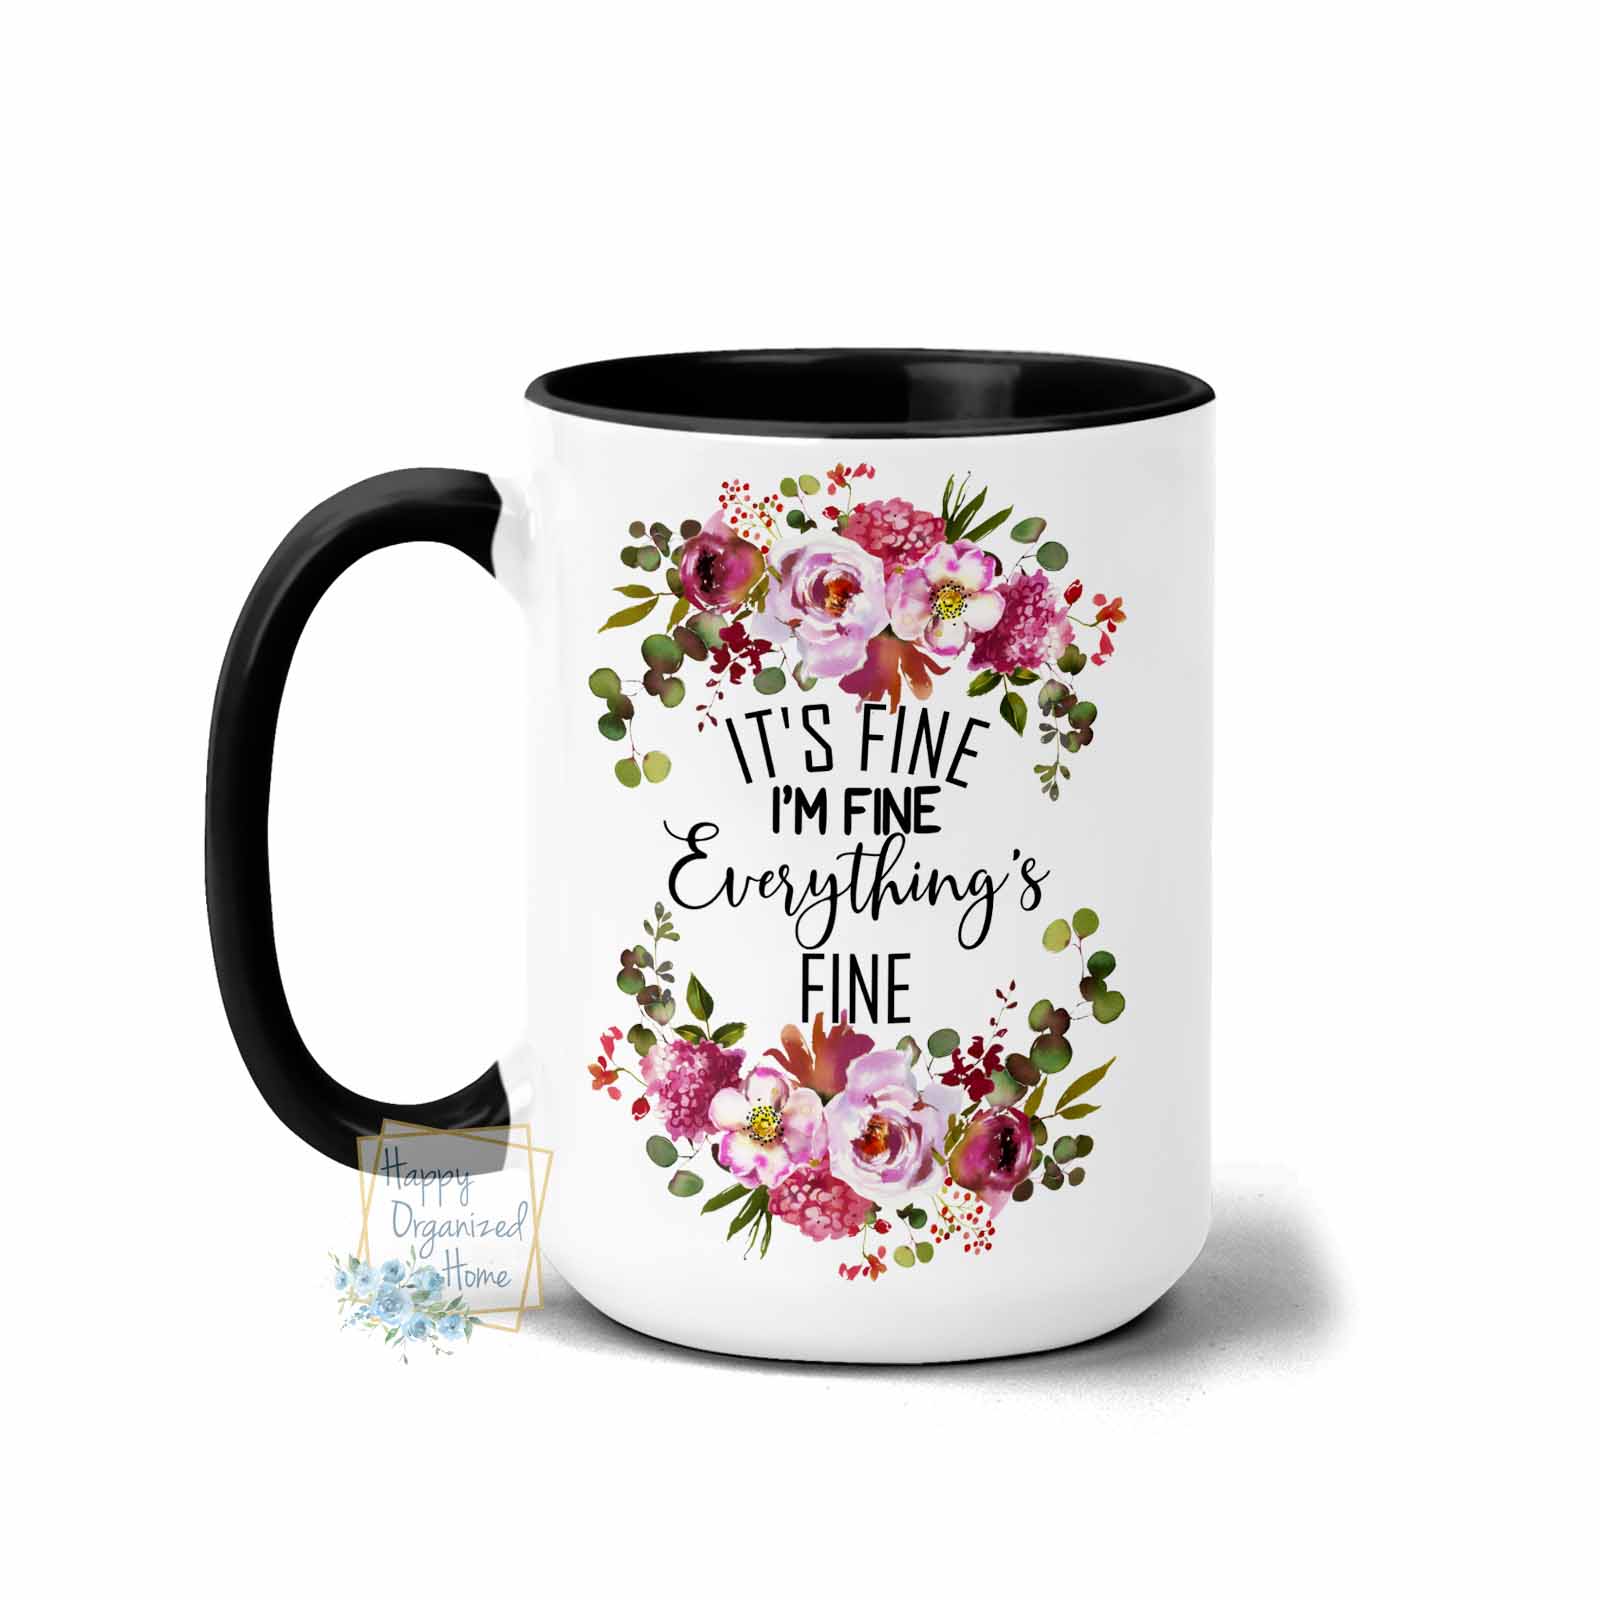 It's Fine, I'm fine, Everything's fine - Coffee Tea Mug